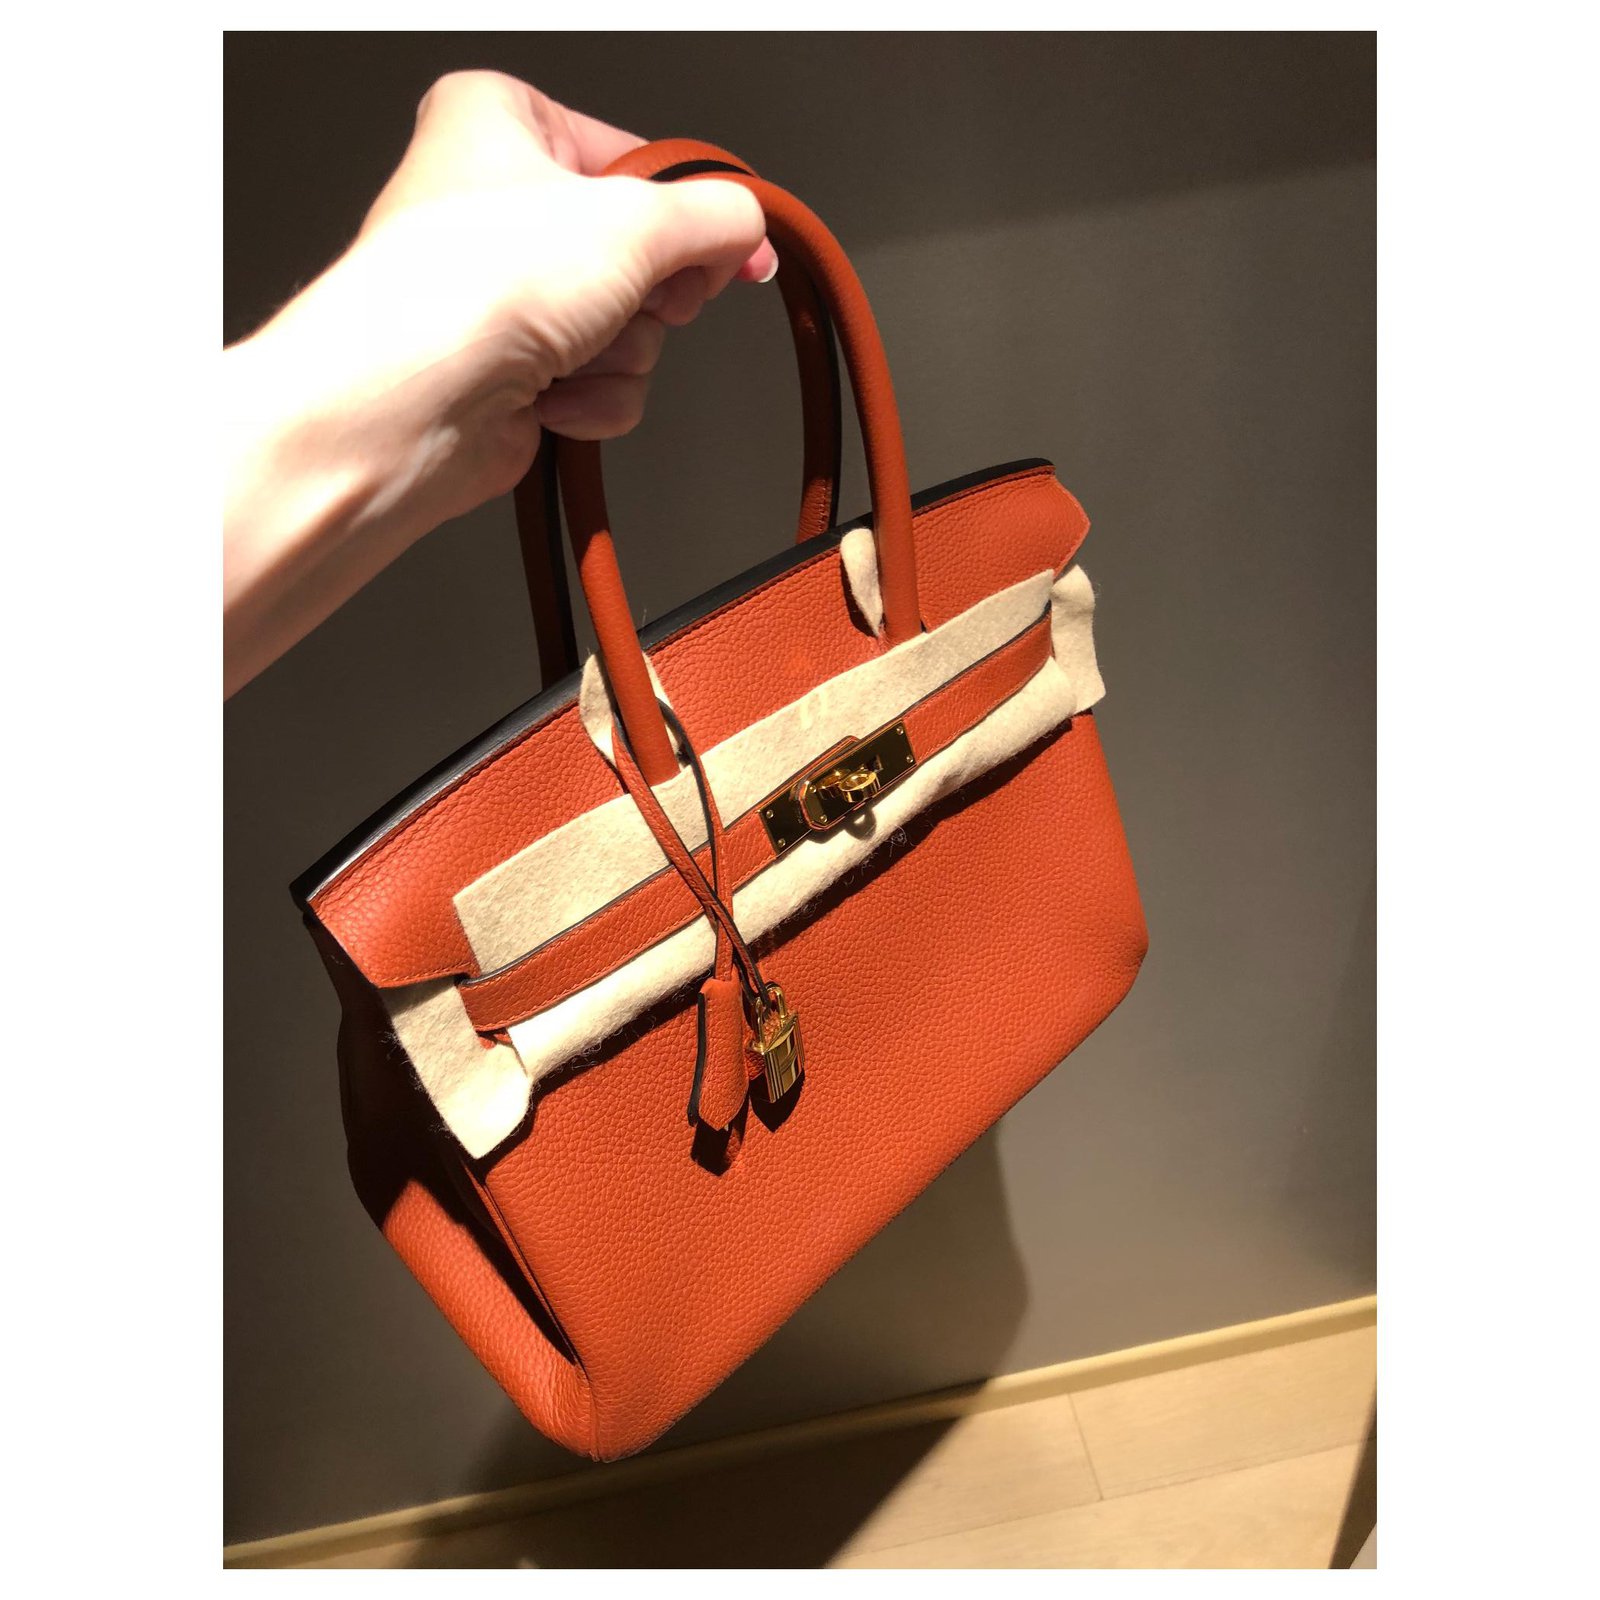 Hermès 30 CM Red Birkin Bag with orange piping and interior